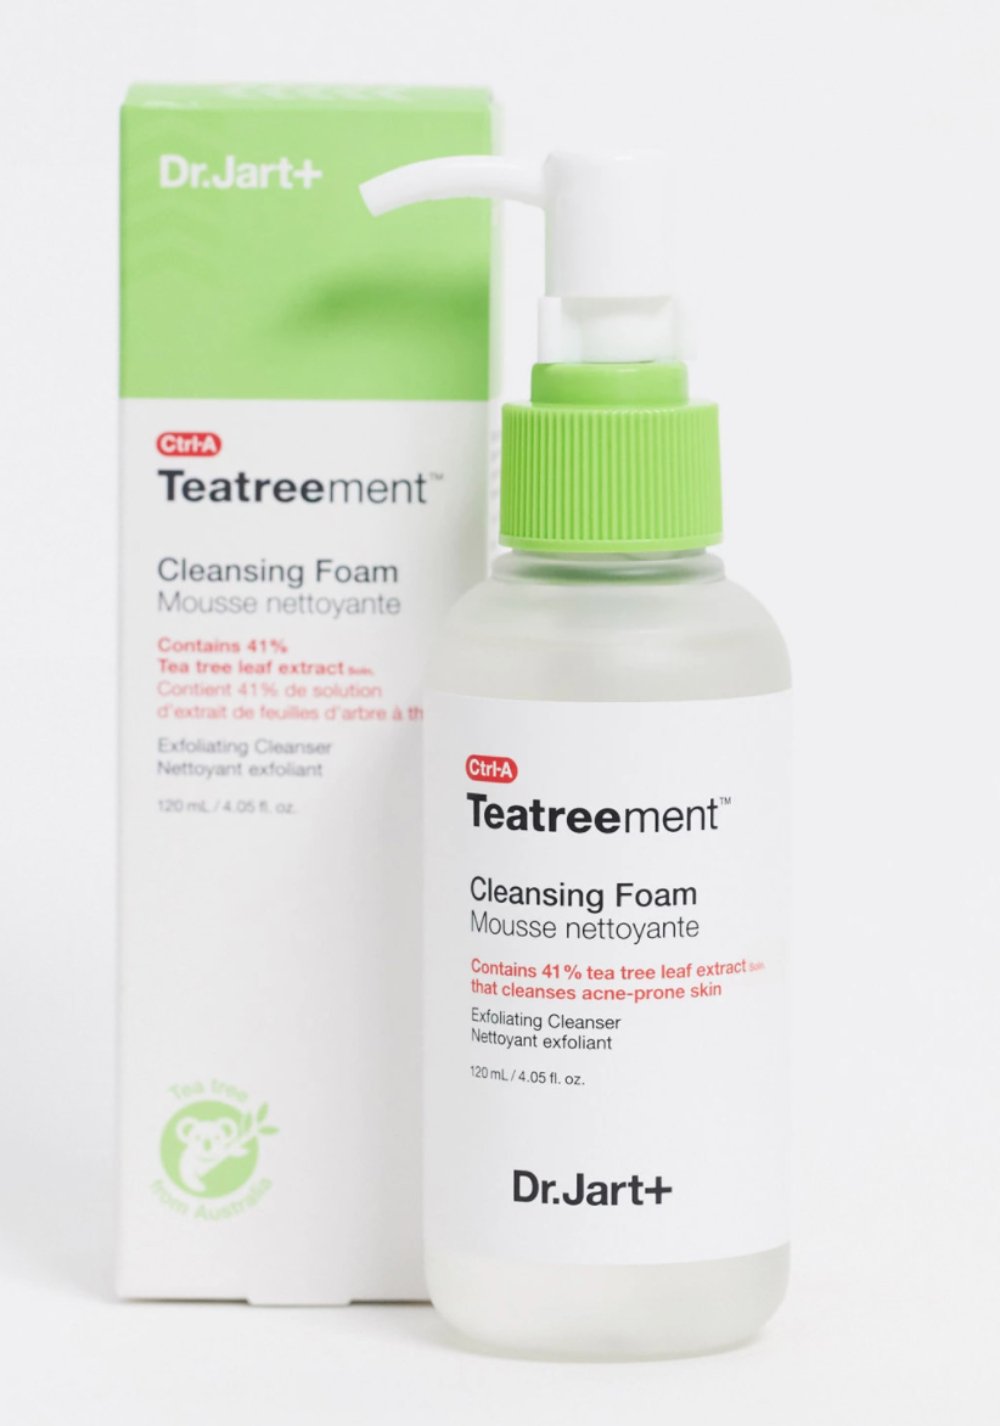 Dr. Jart+ Ctrl+A Teatreement Cleansing Foam 120ml - The Face Method